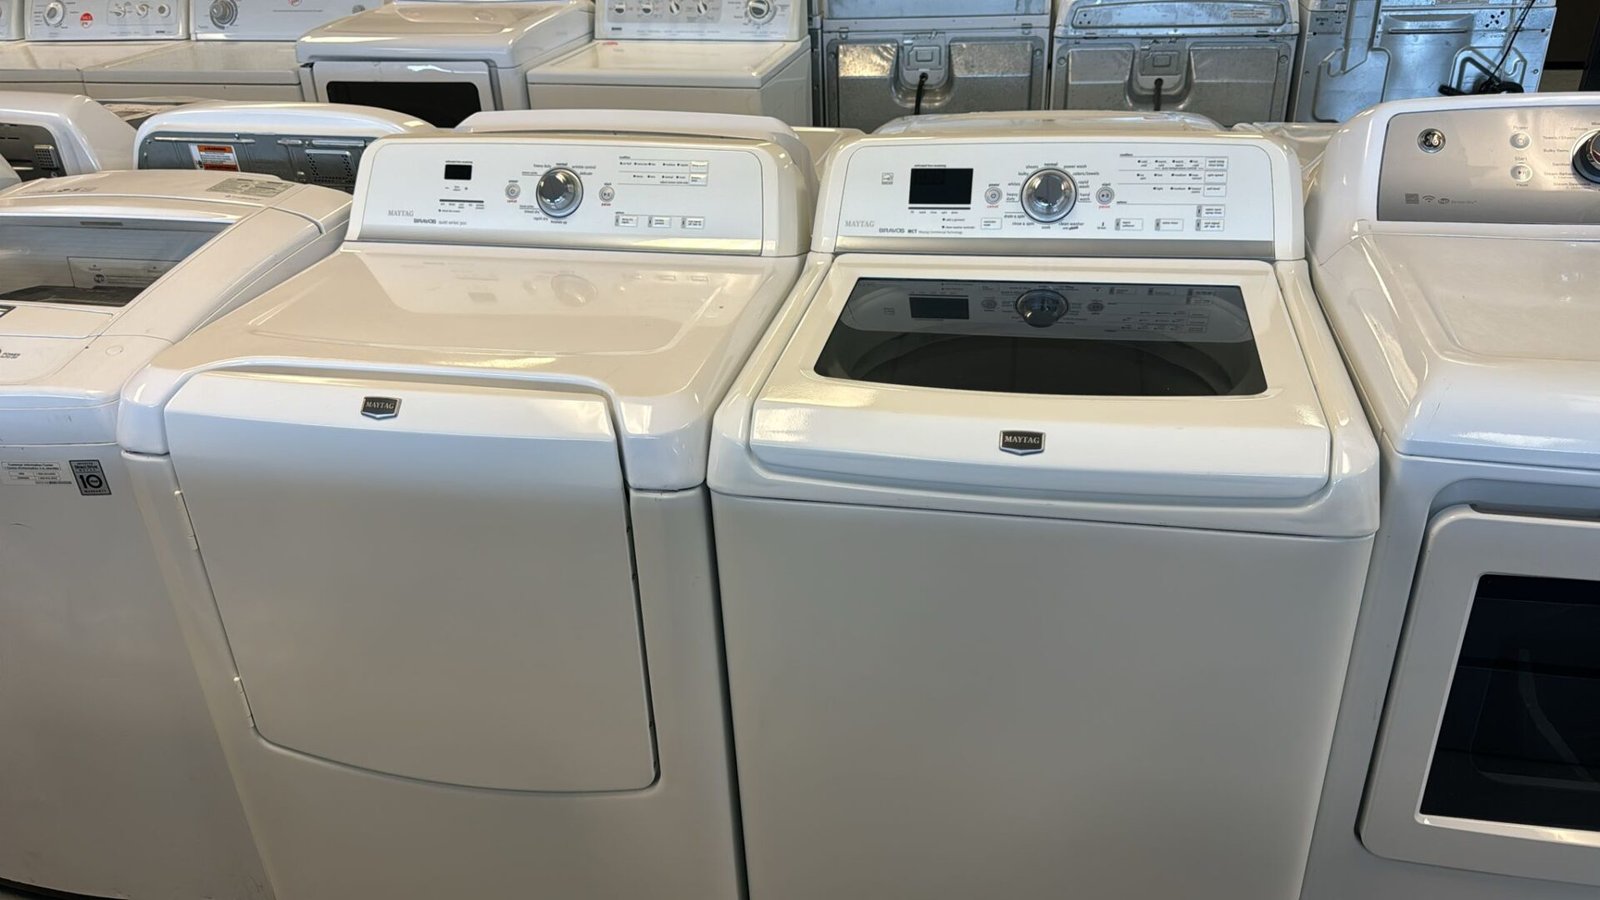 Refurbished Washer Dryer Set